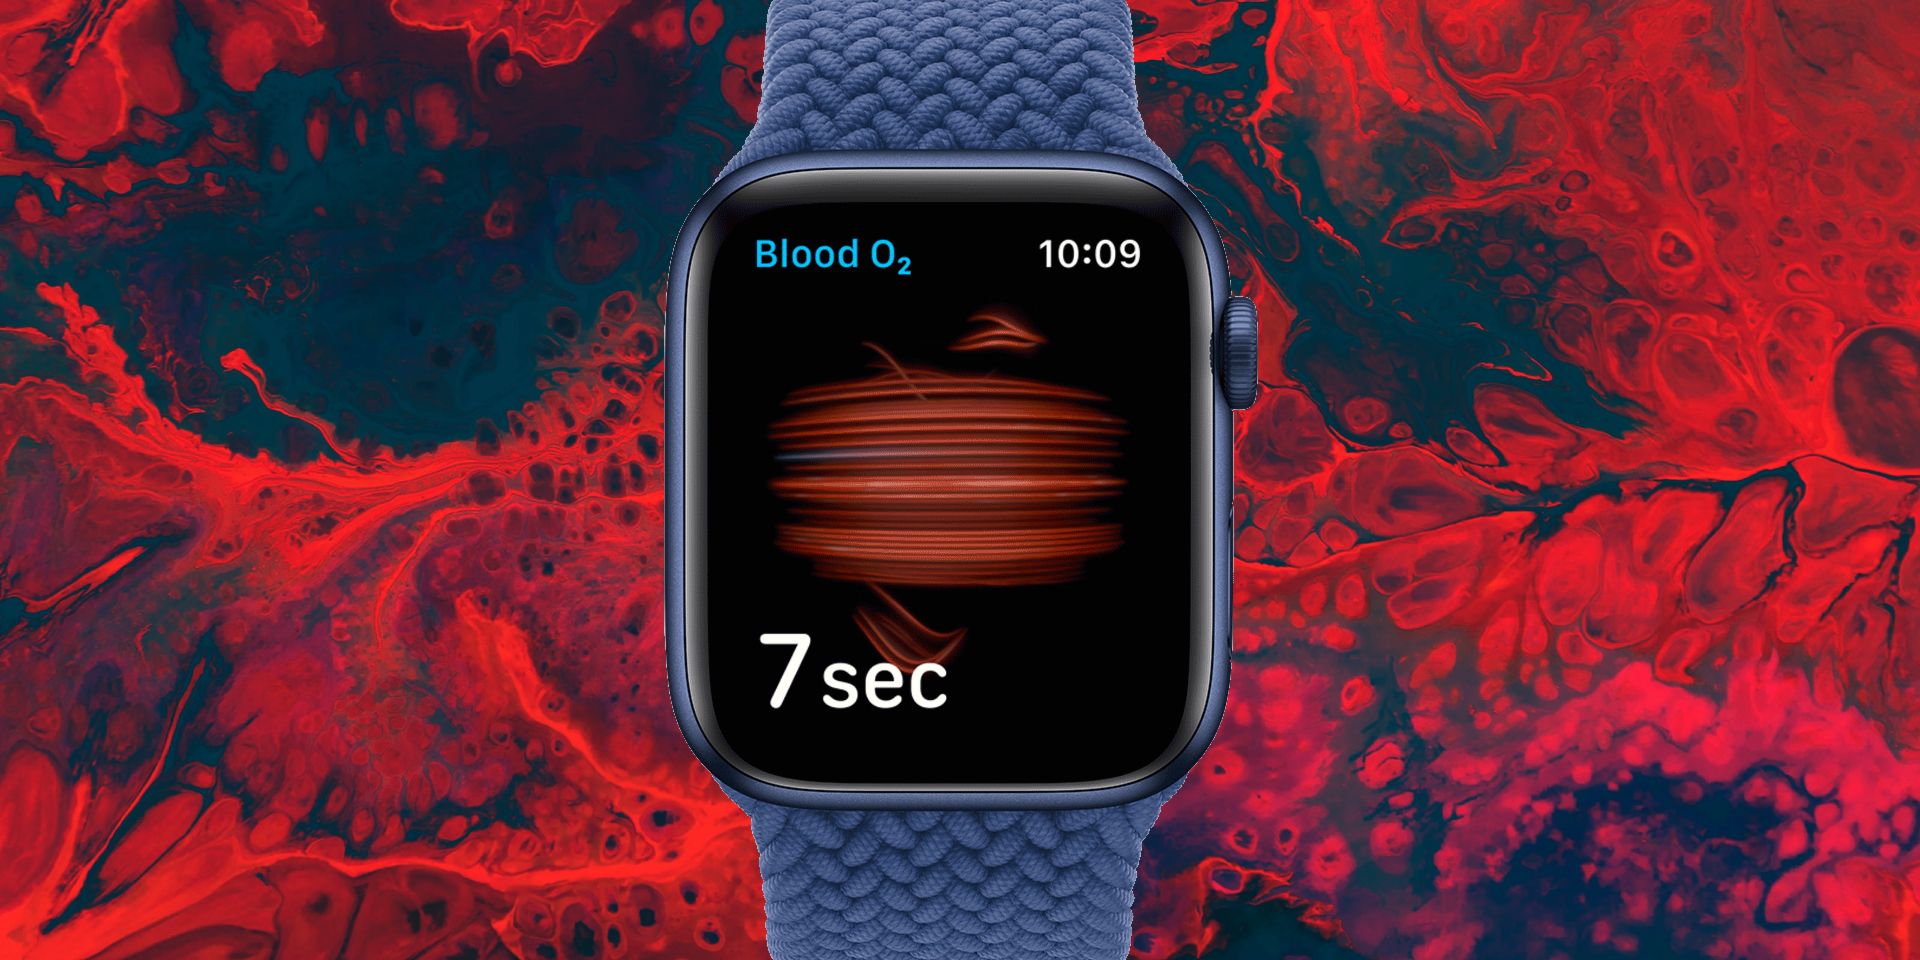 Apple Watch Series 6 over blood artwork background